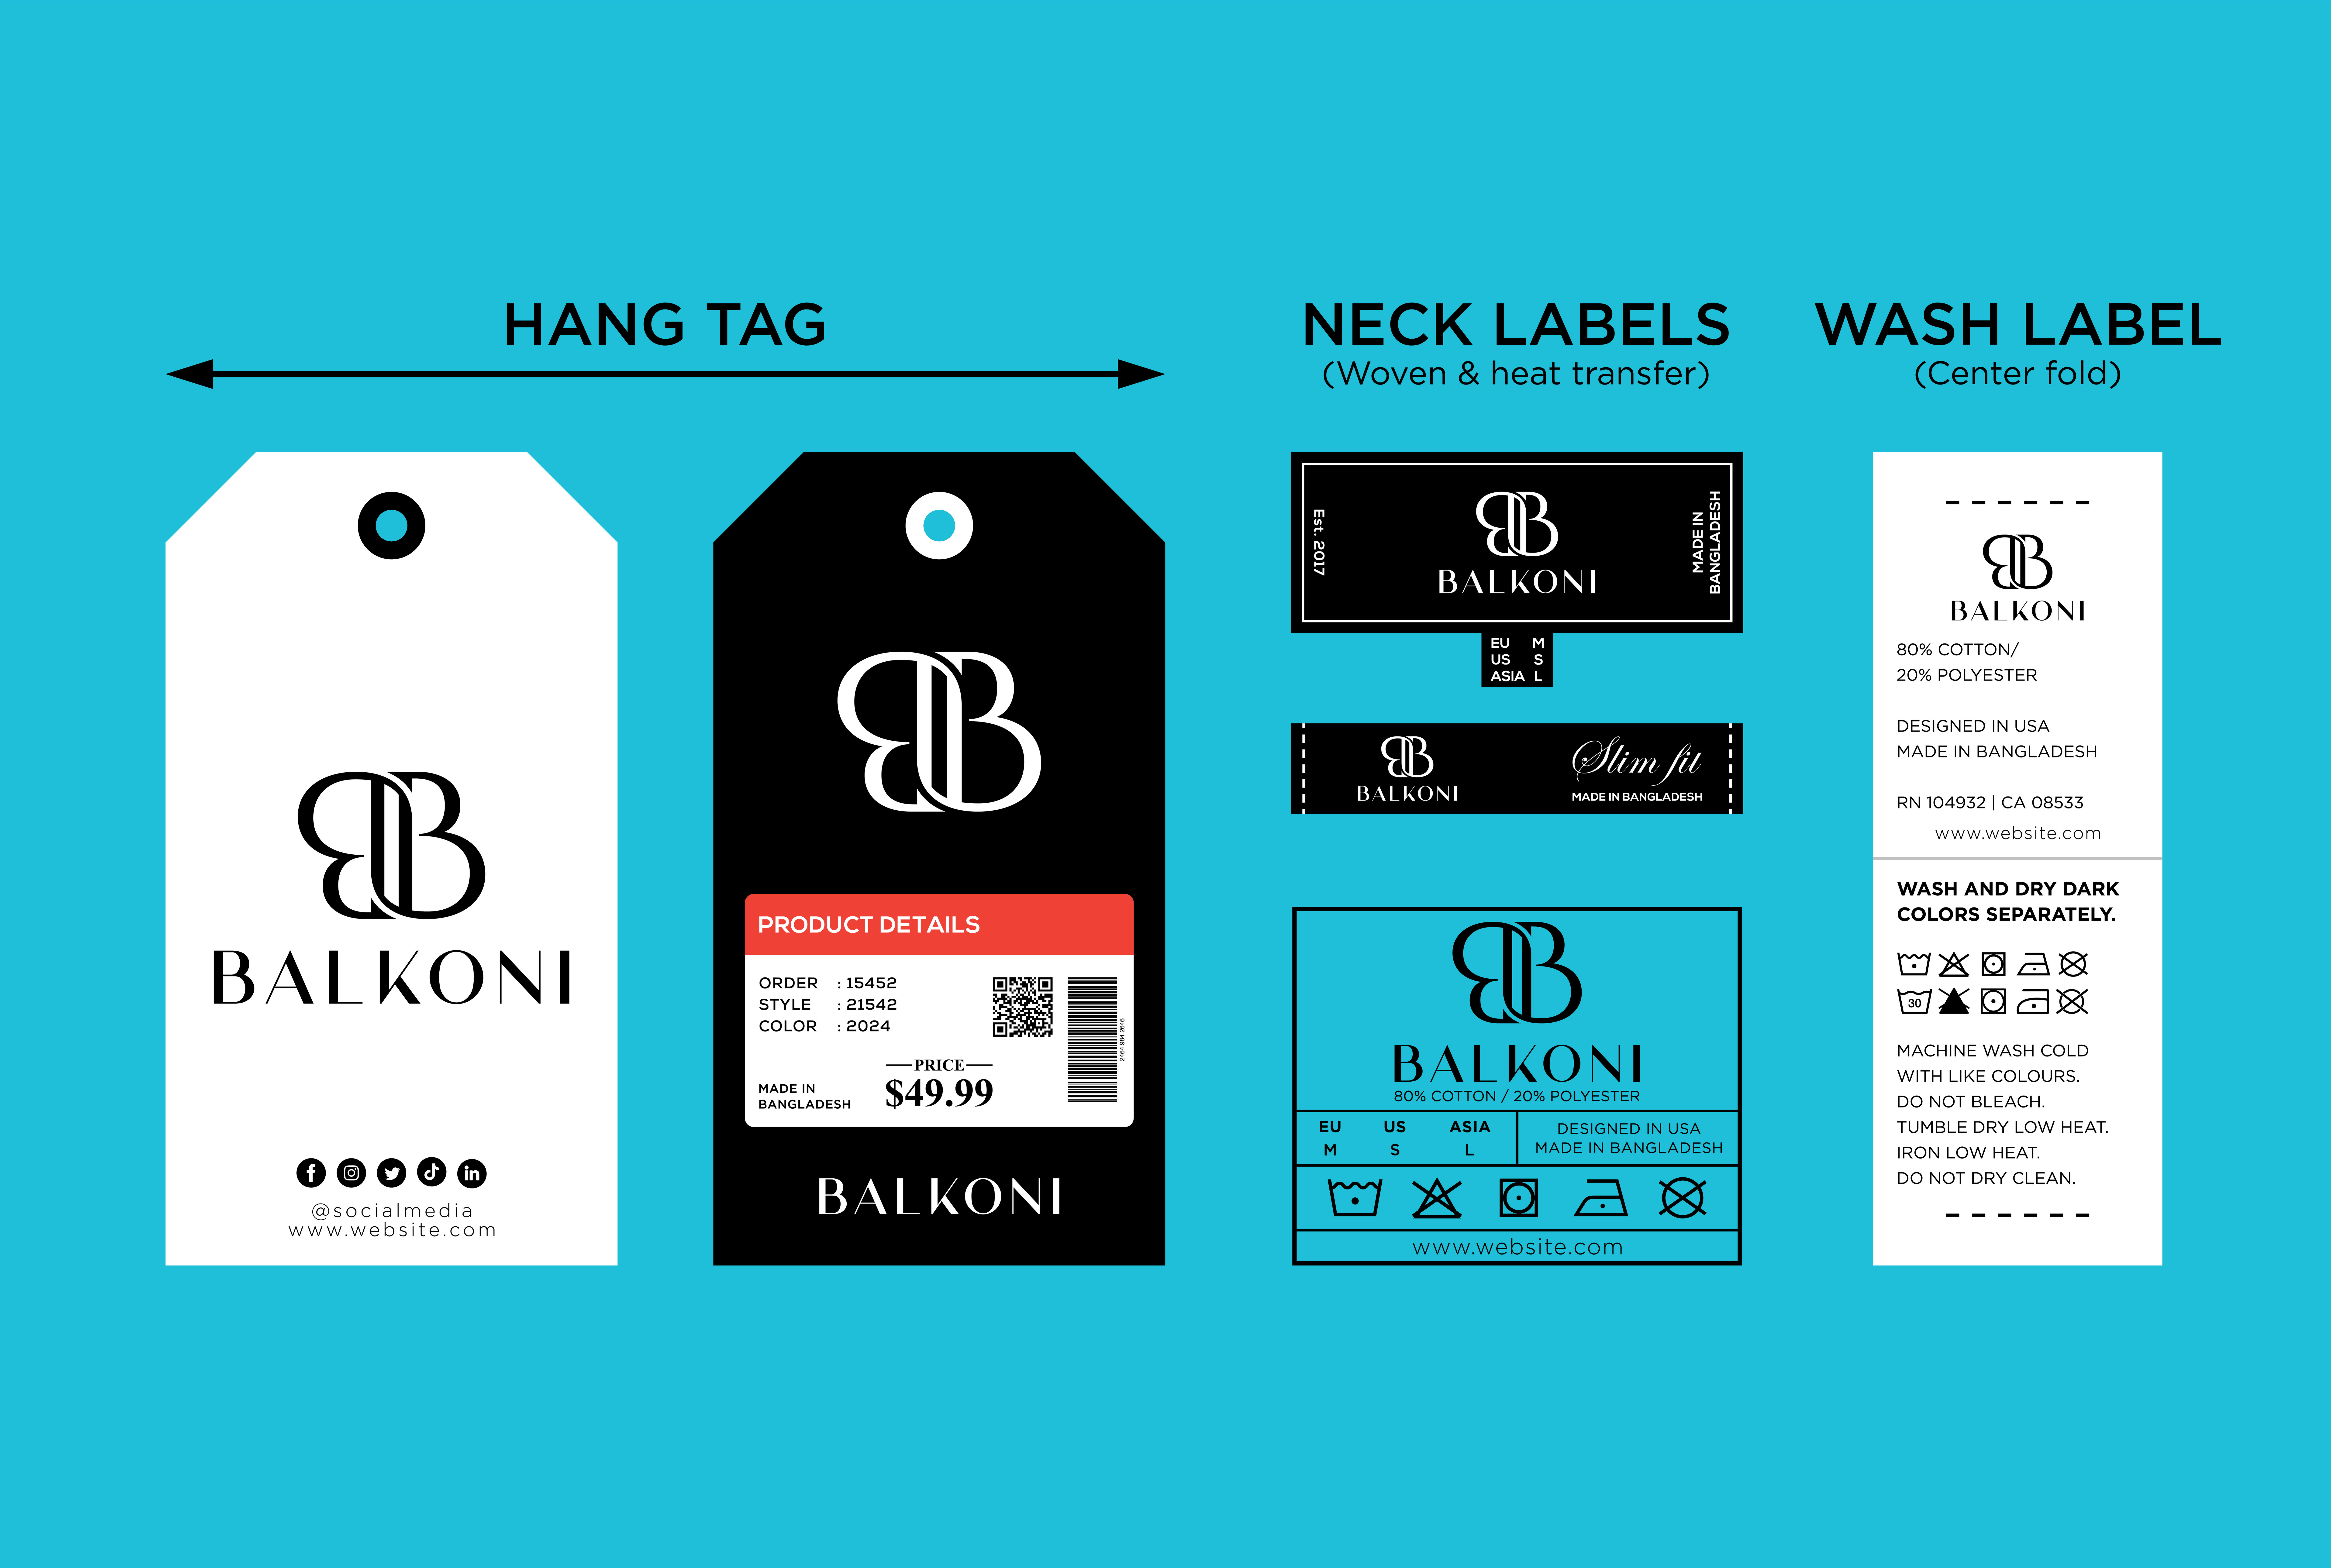 Designersazedul: I will design clothing label, clothing tag, hangtag, neck  label for $5 on fiverr.com